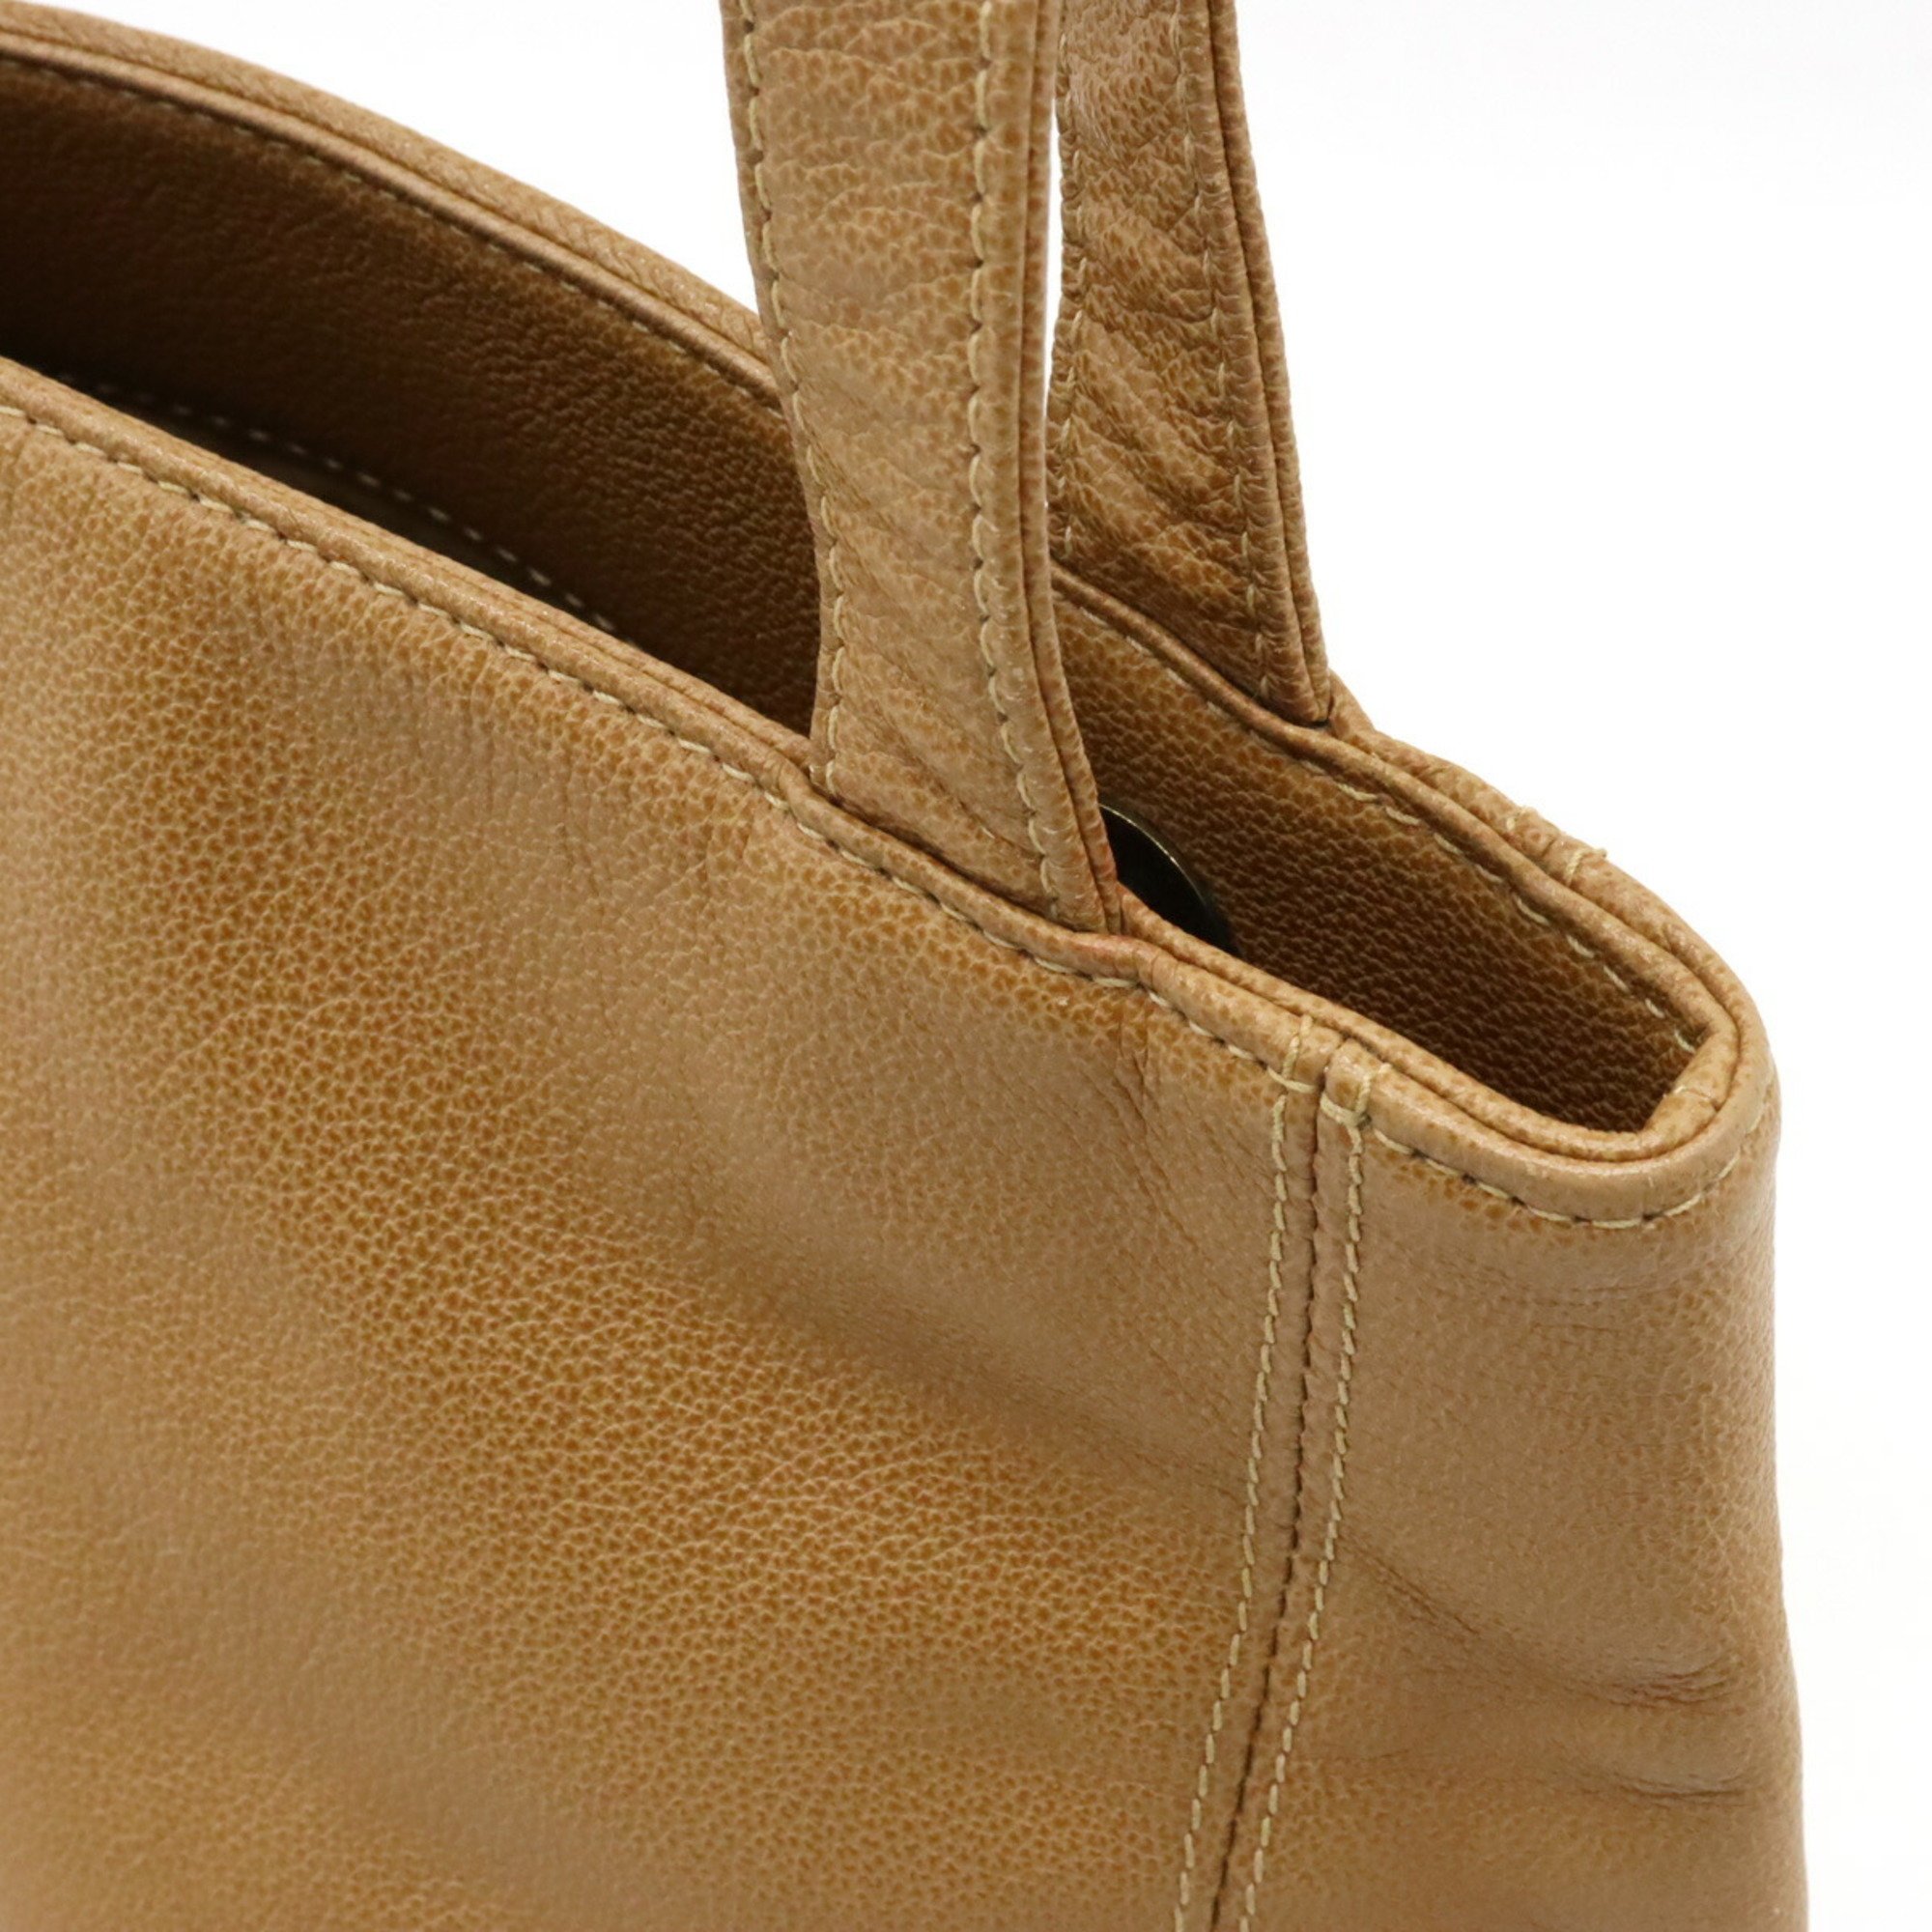 CHANEL Coco Mark Tote Bag Shoulder Leather Beige Brown